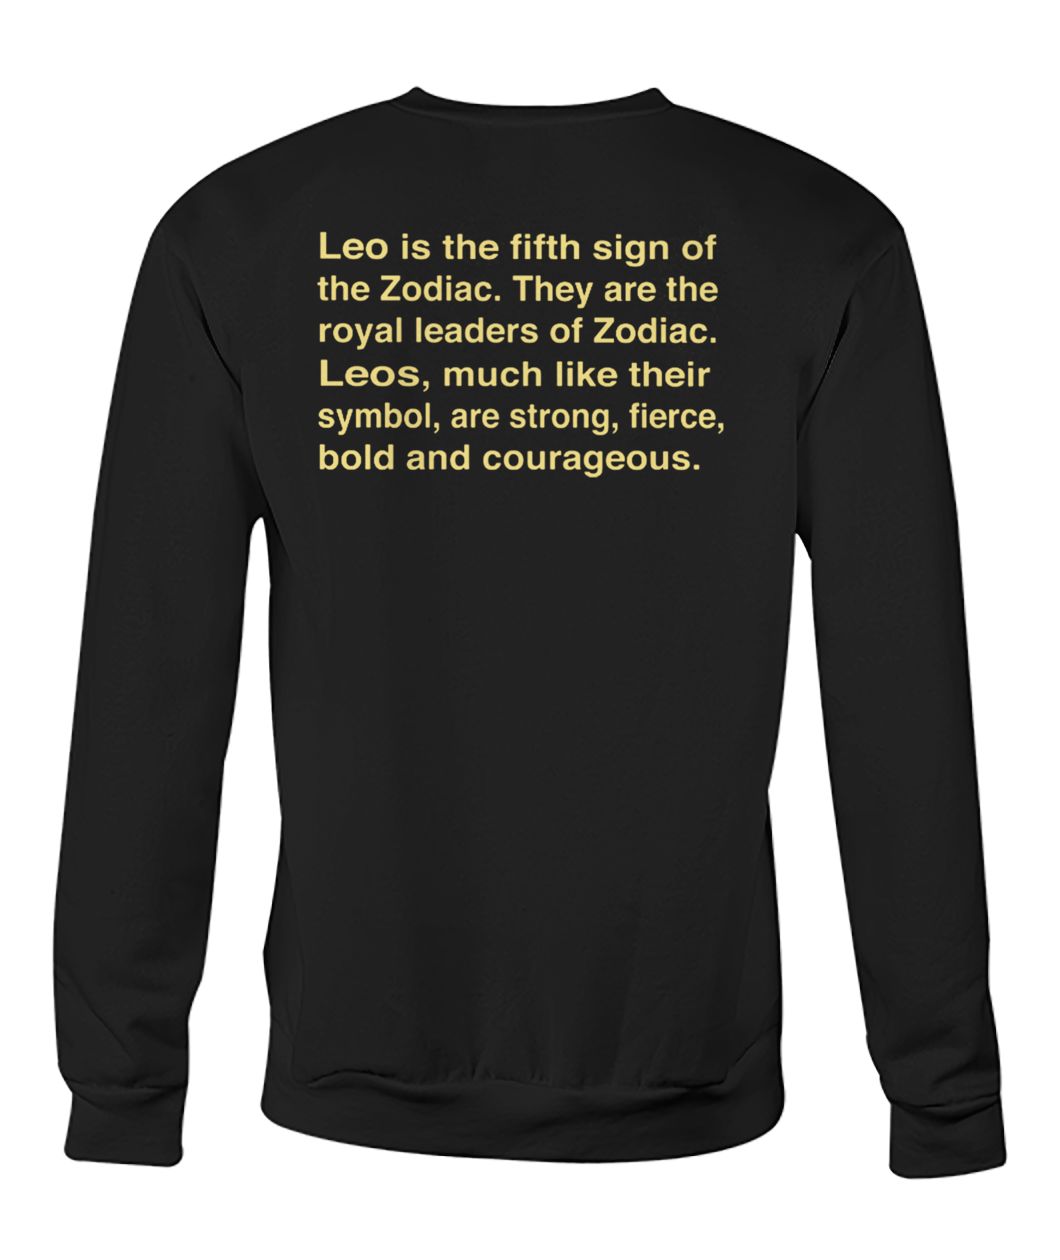 Leo is the fifth sign of the zodiac crew neck sweatshirt